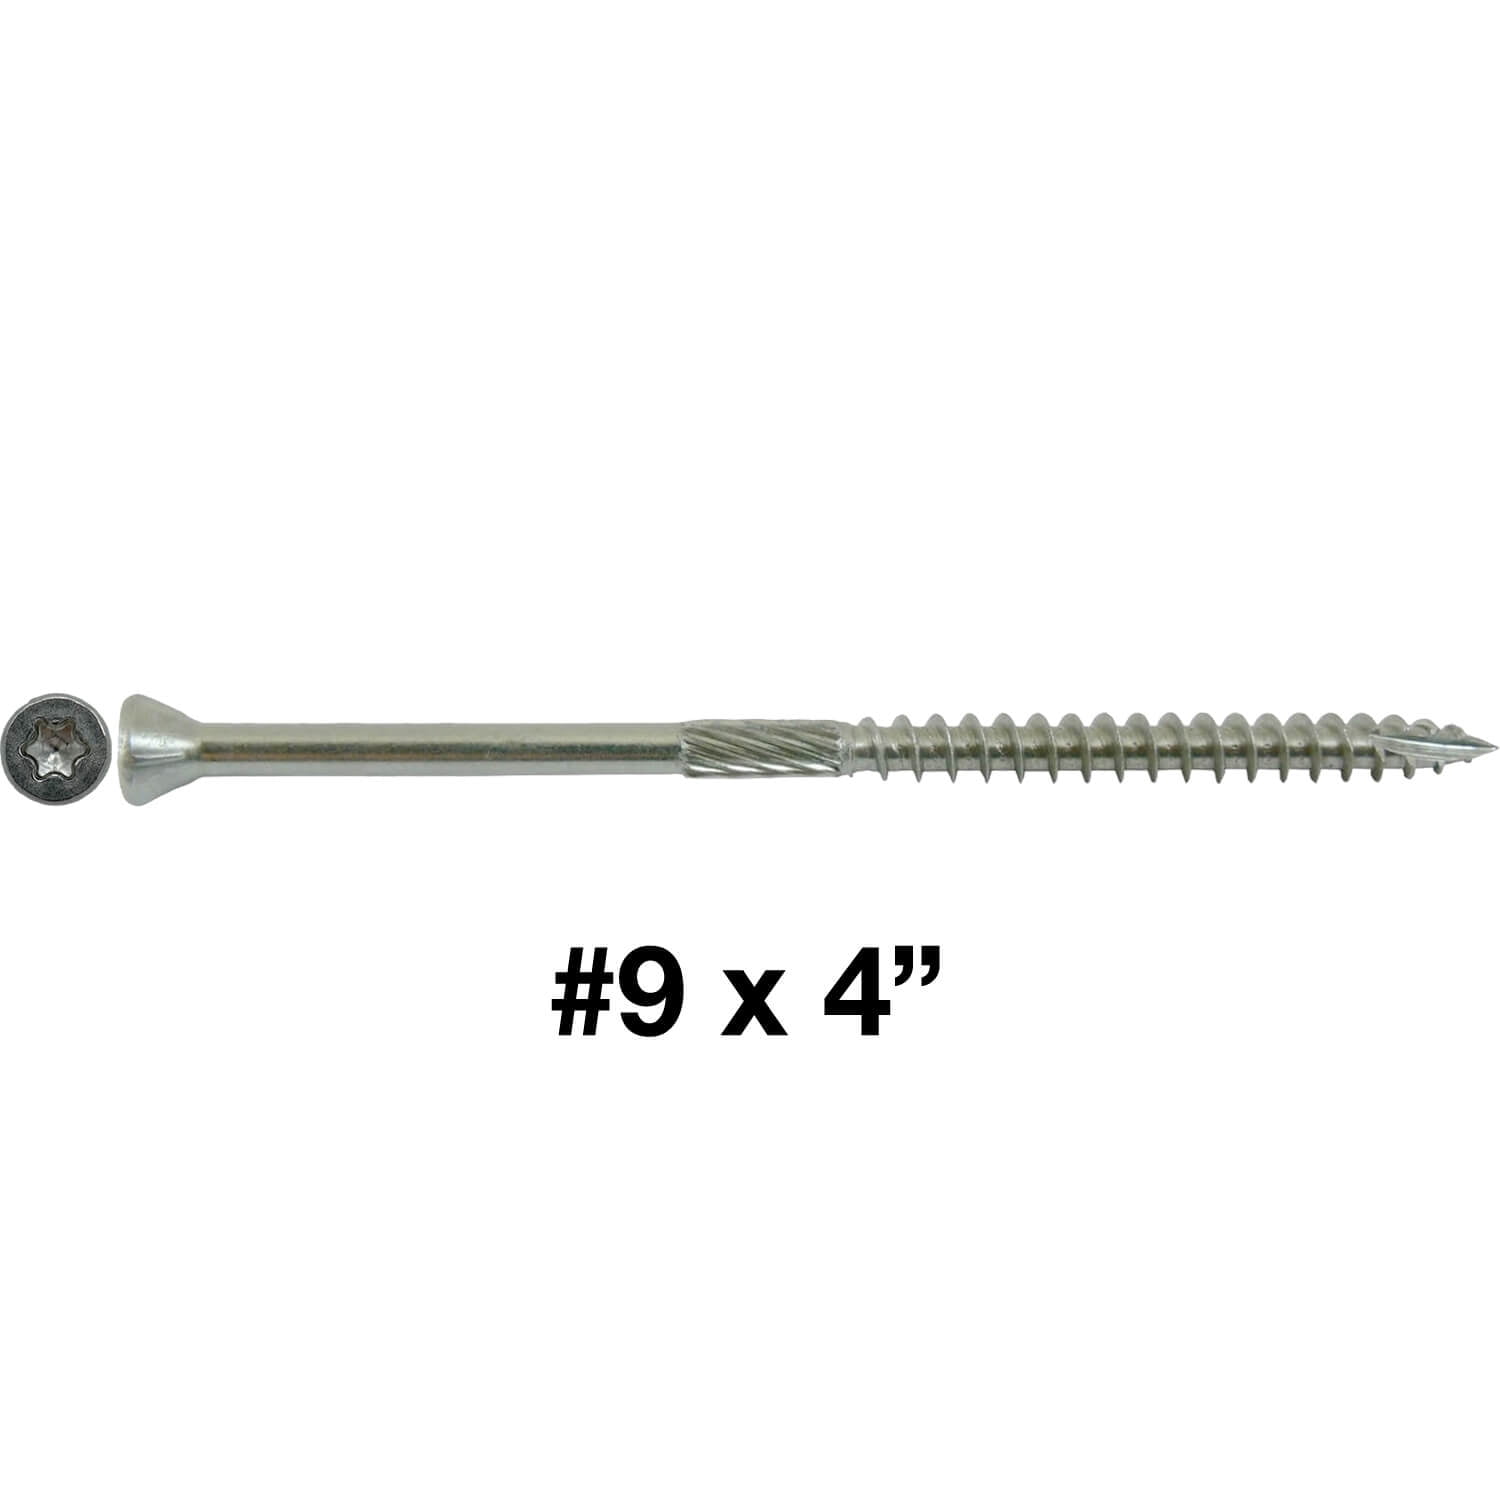 Jake Sales Brand #9 x 4” Torx/Star Stainless Steel Trim Head Wood Screw ~65 Screws - ACQ Compatible - 1 Pound Walmart.com